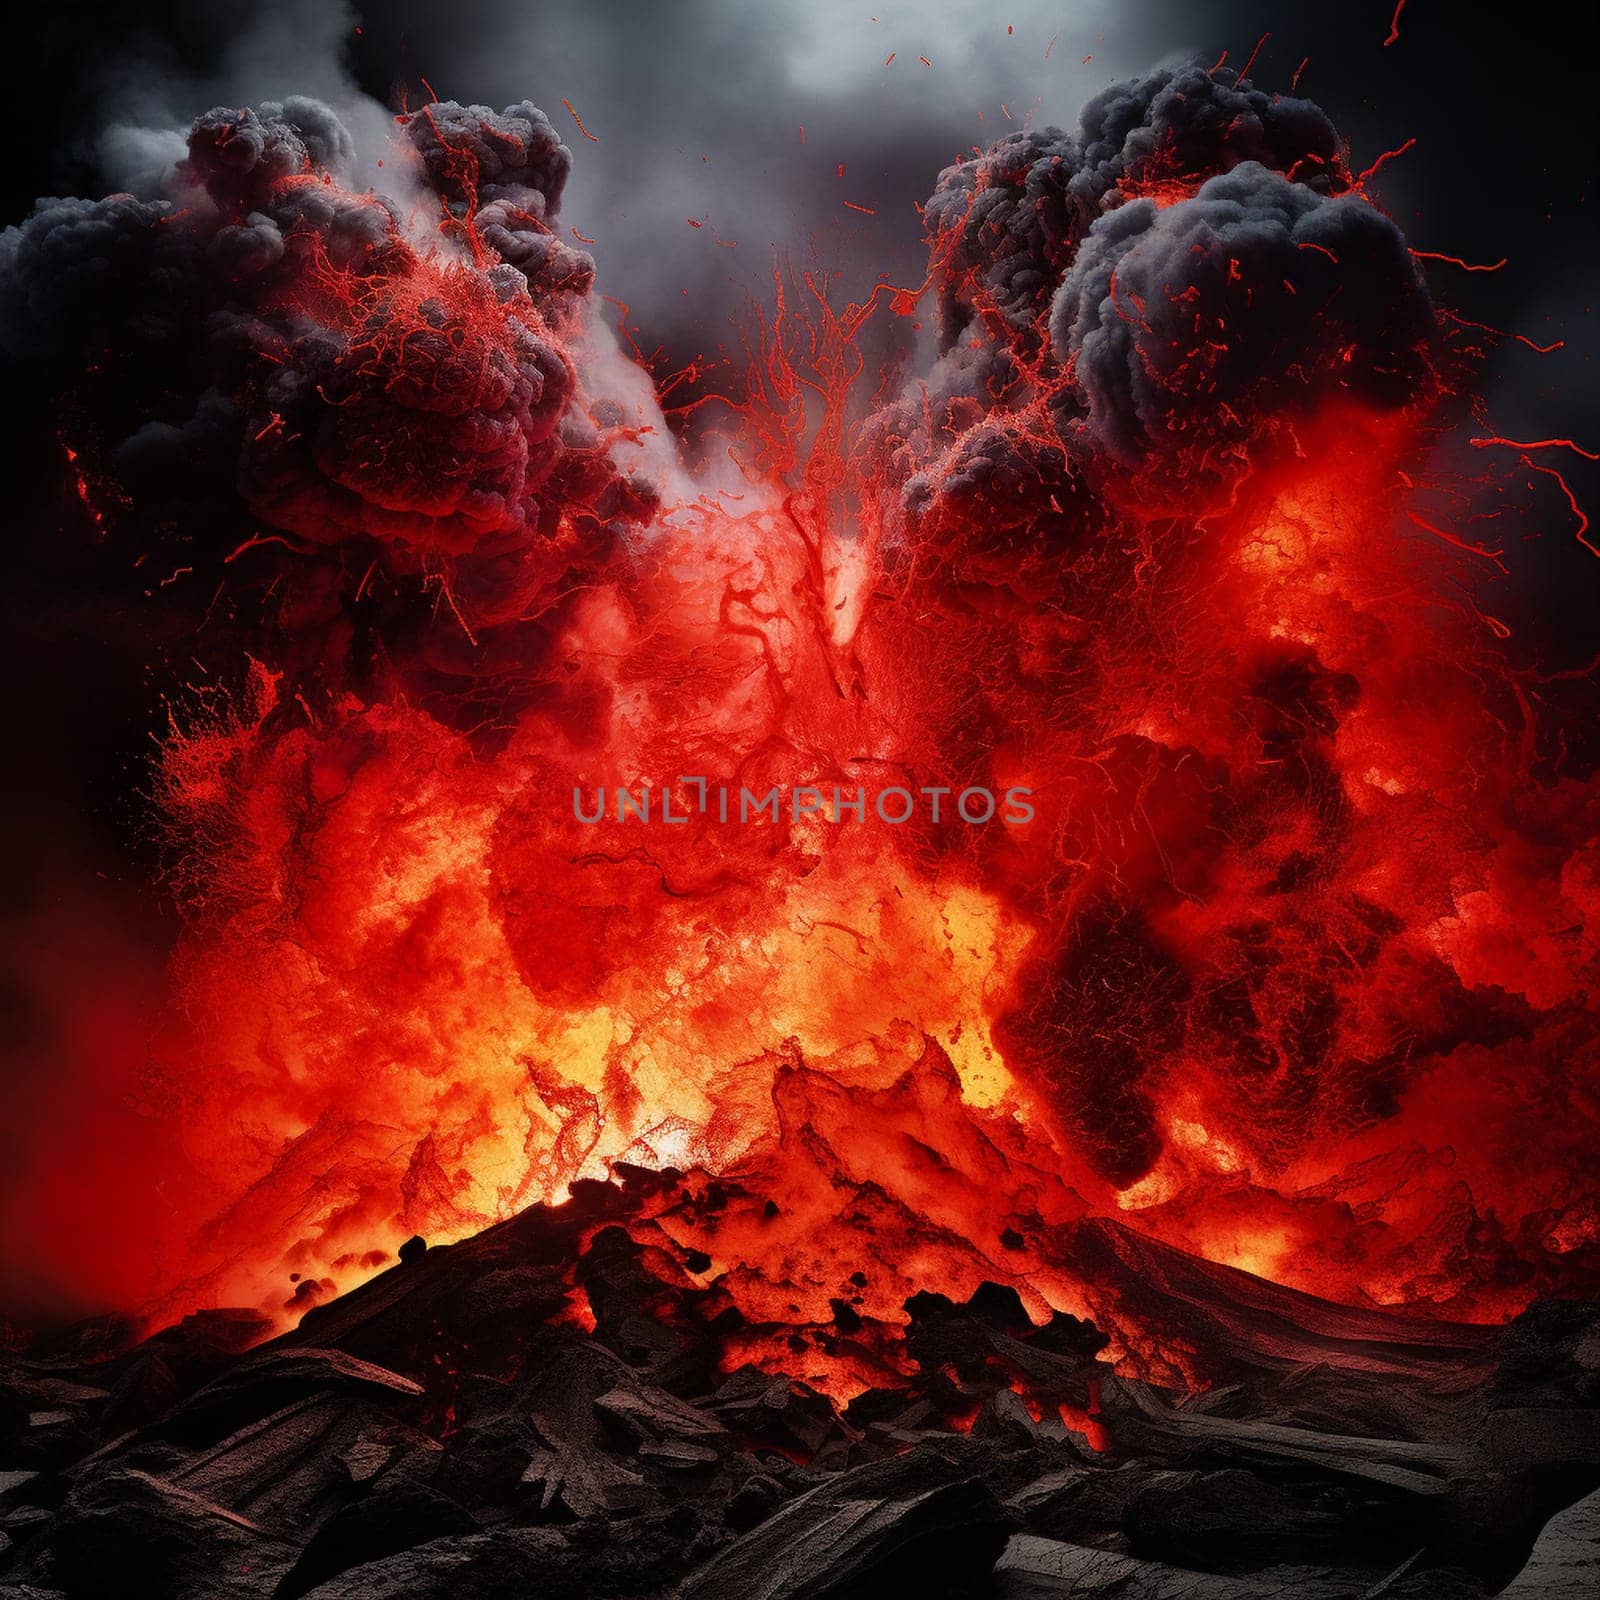 Firestorm Burst: Vivid and Dynamic Image of an Intense Volcanic Eruption by Sahin